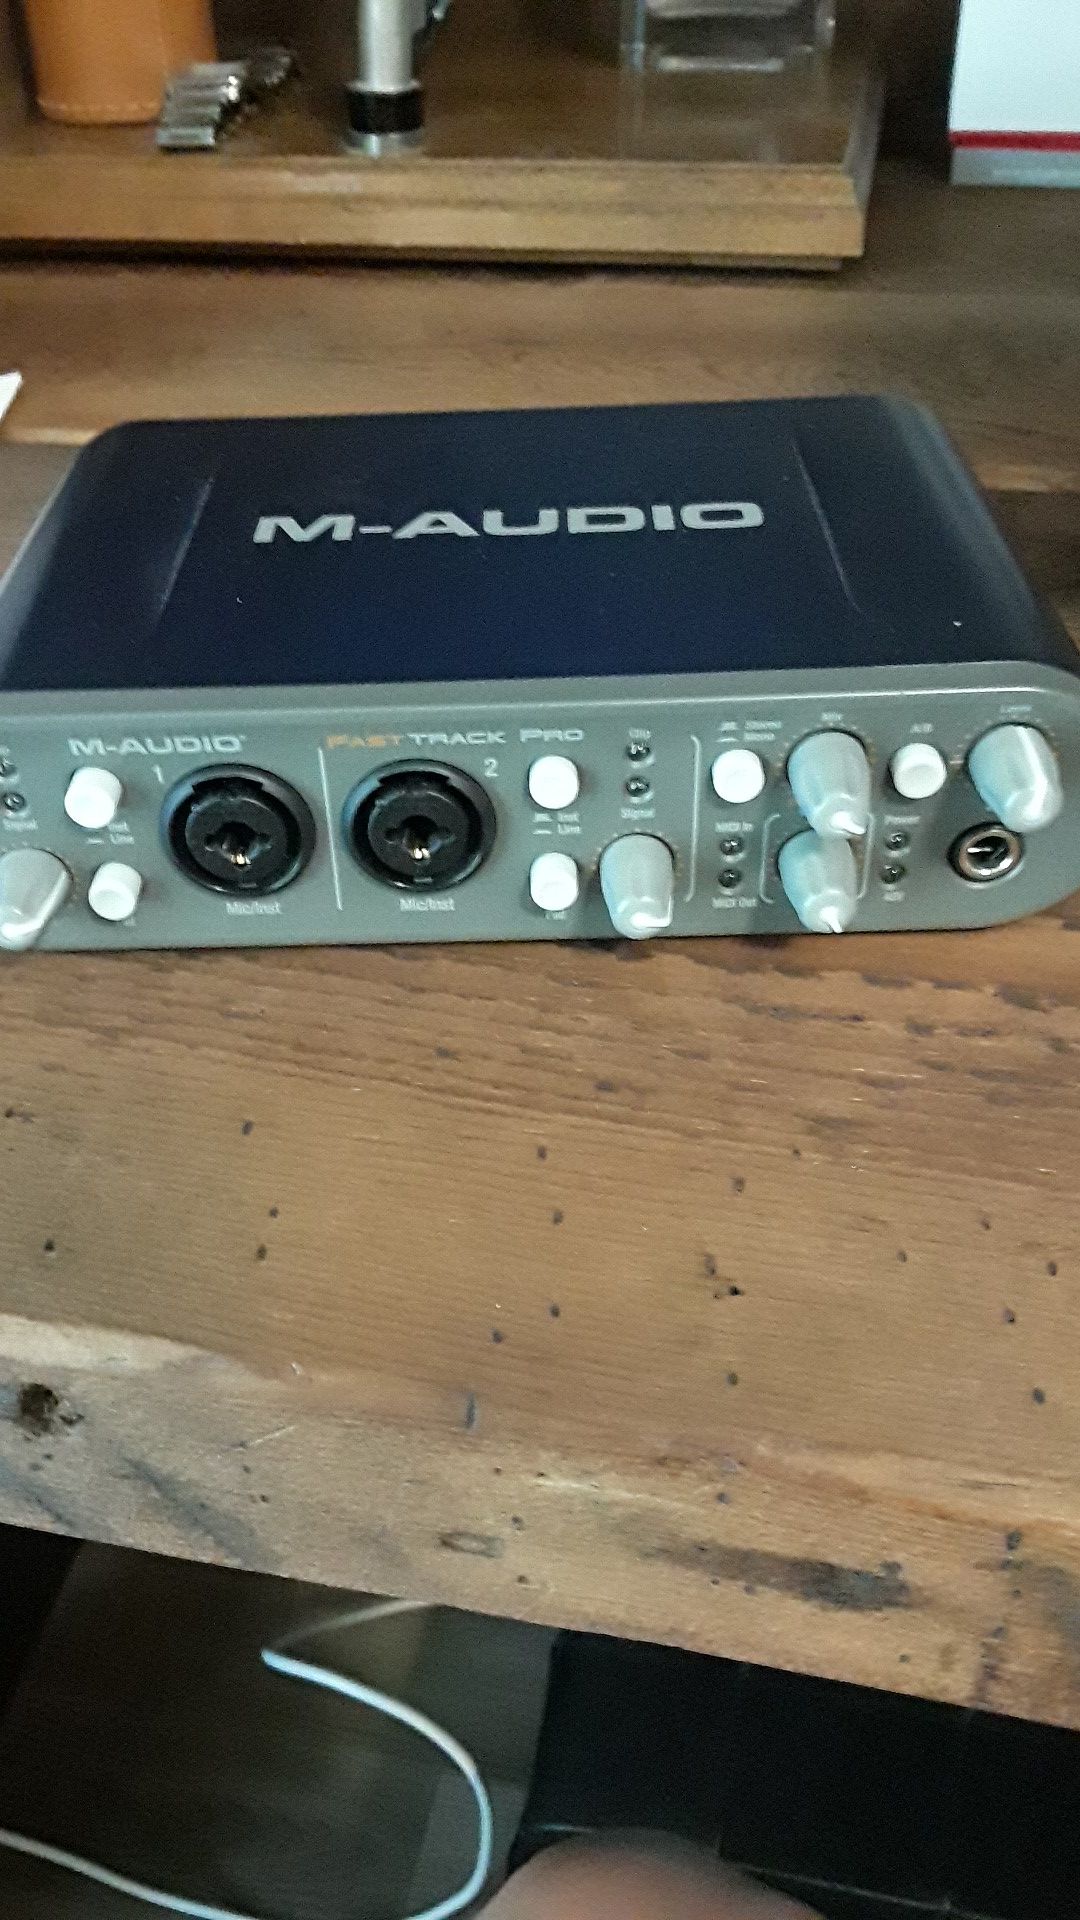 M-Audio fast track pro.